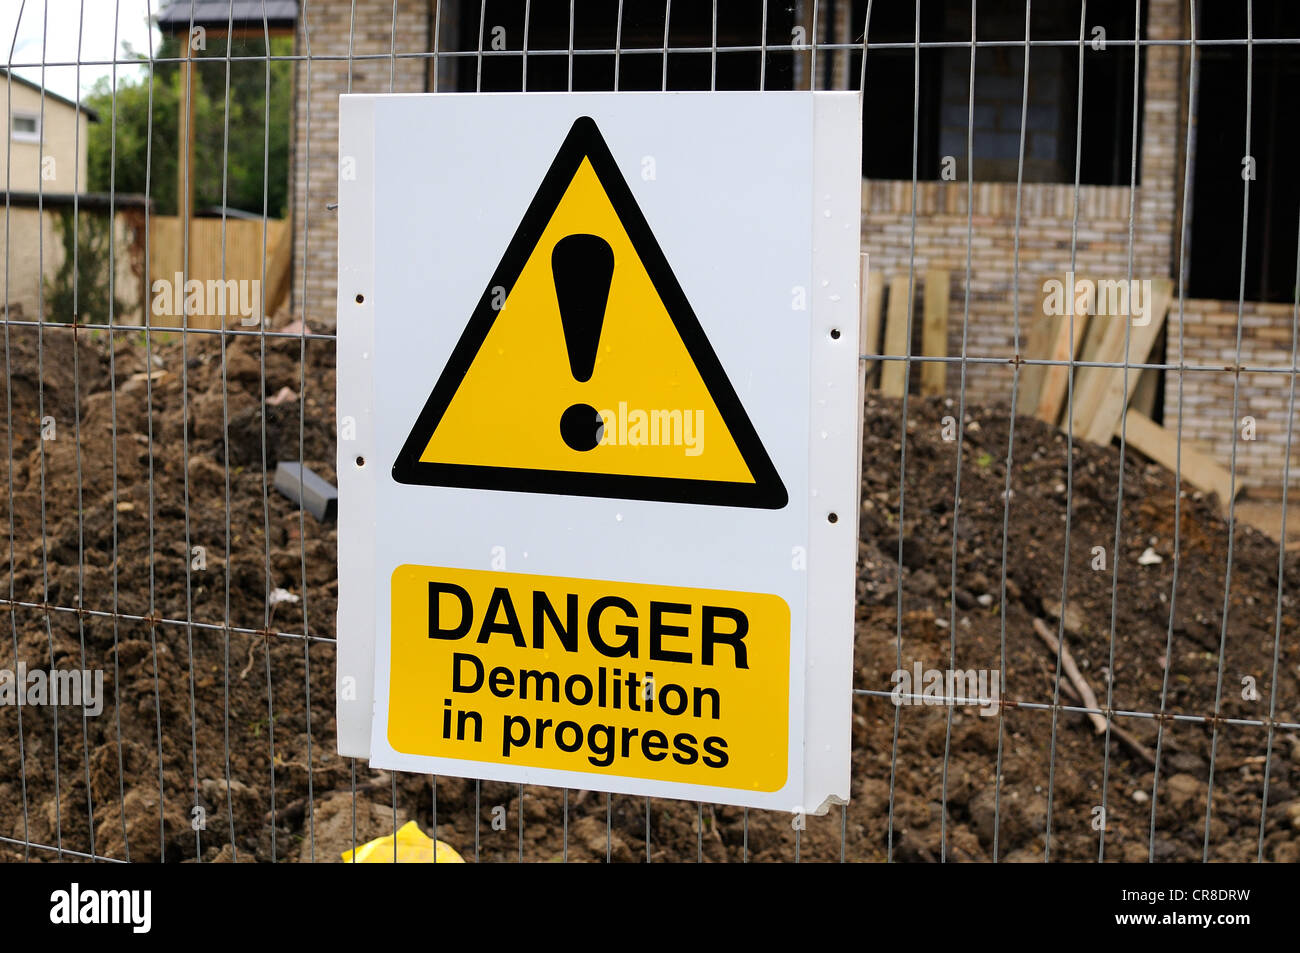 Danger demolition warning sign on building site Stock Photo